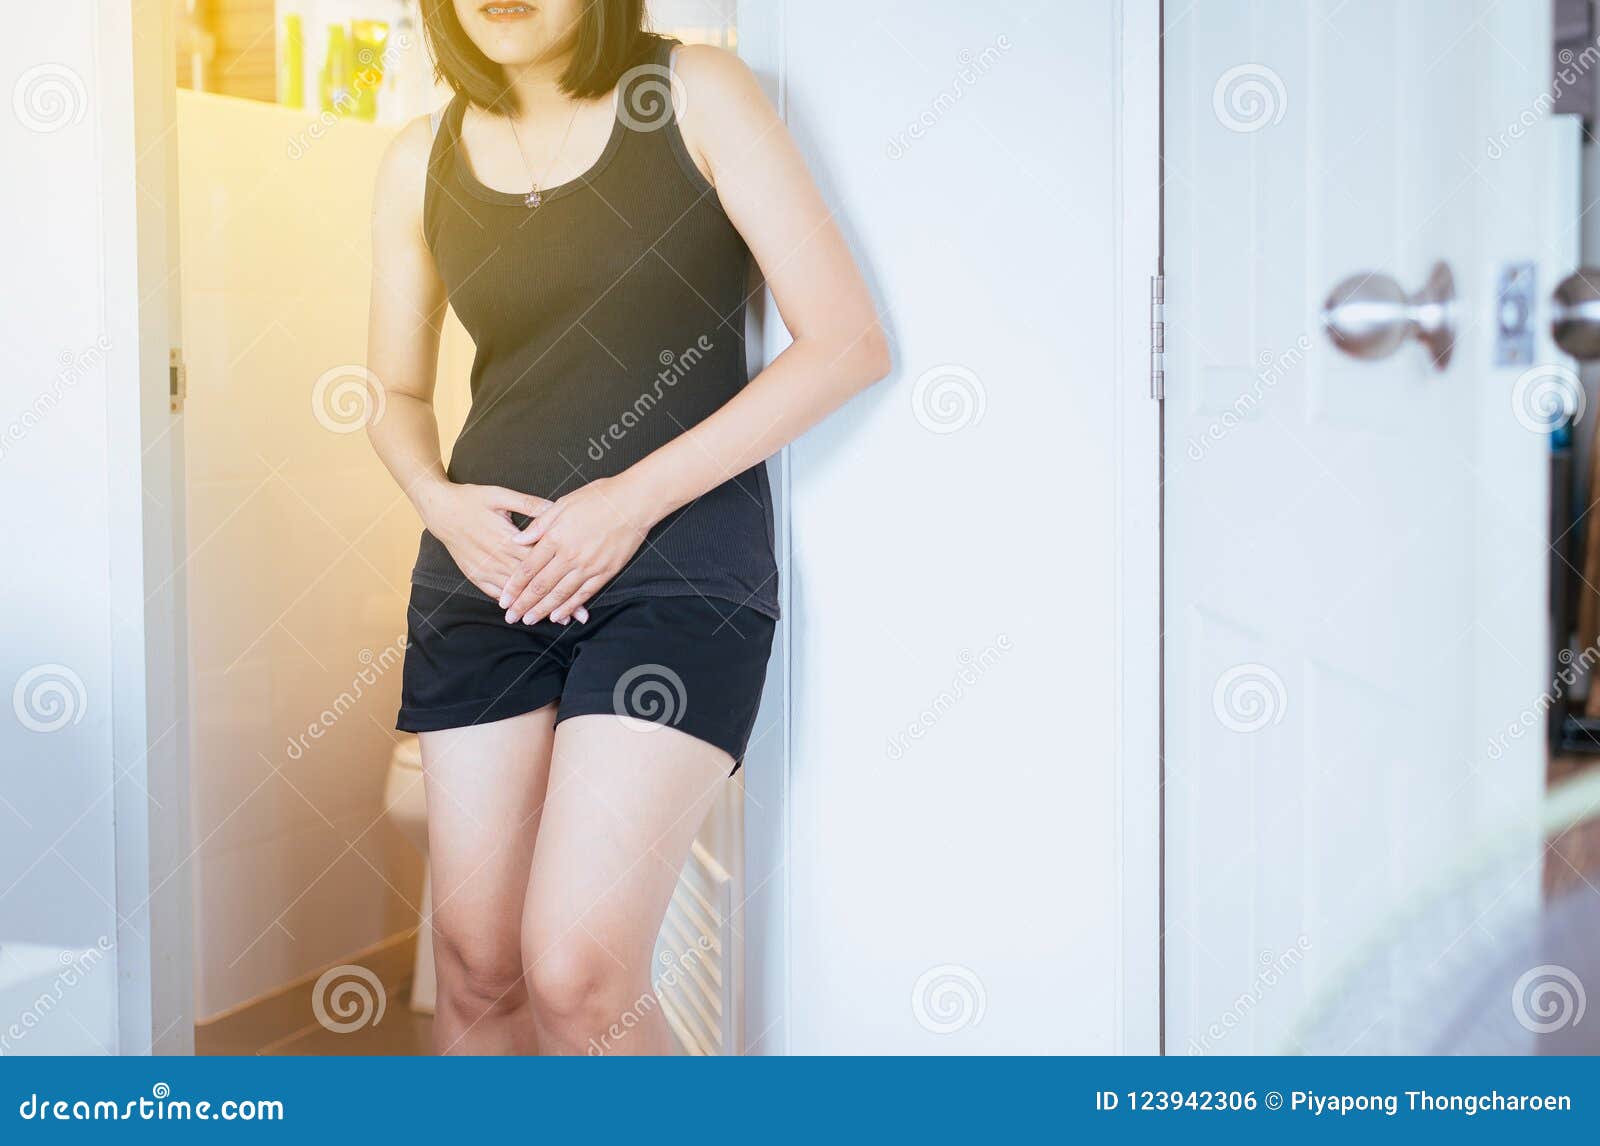 chris treml add photo desperate girls peeing in the bathroom